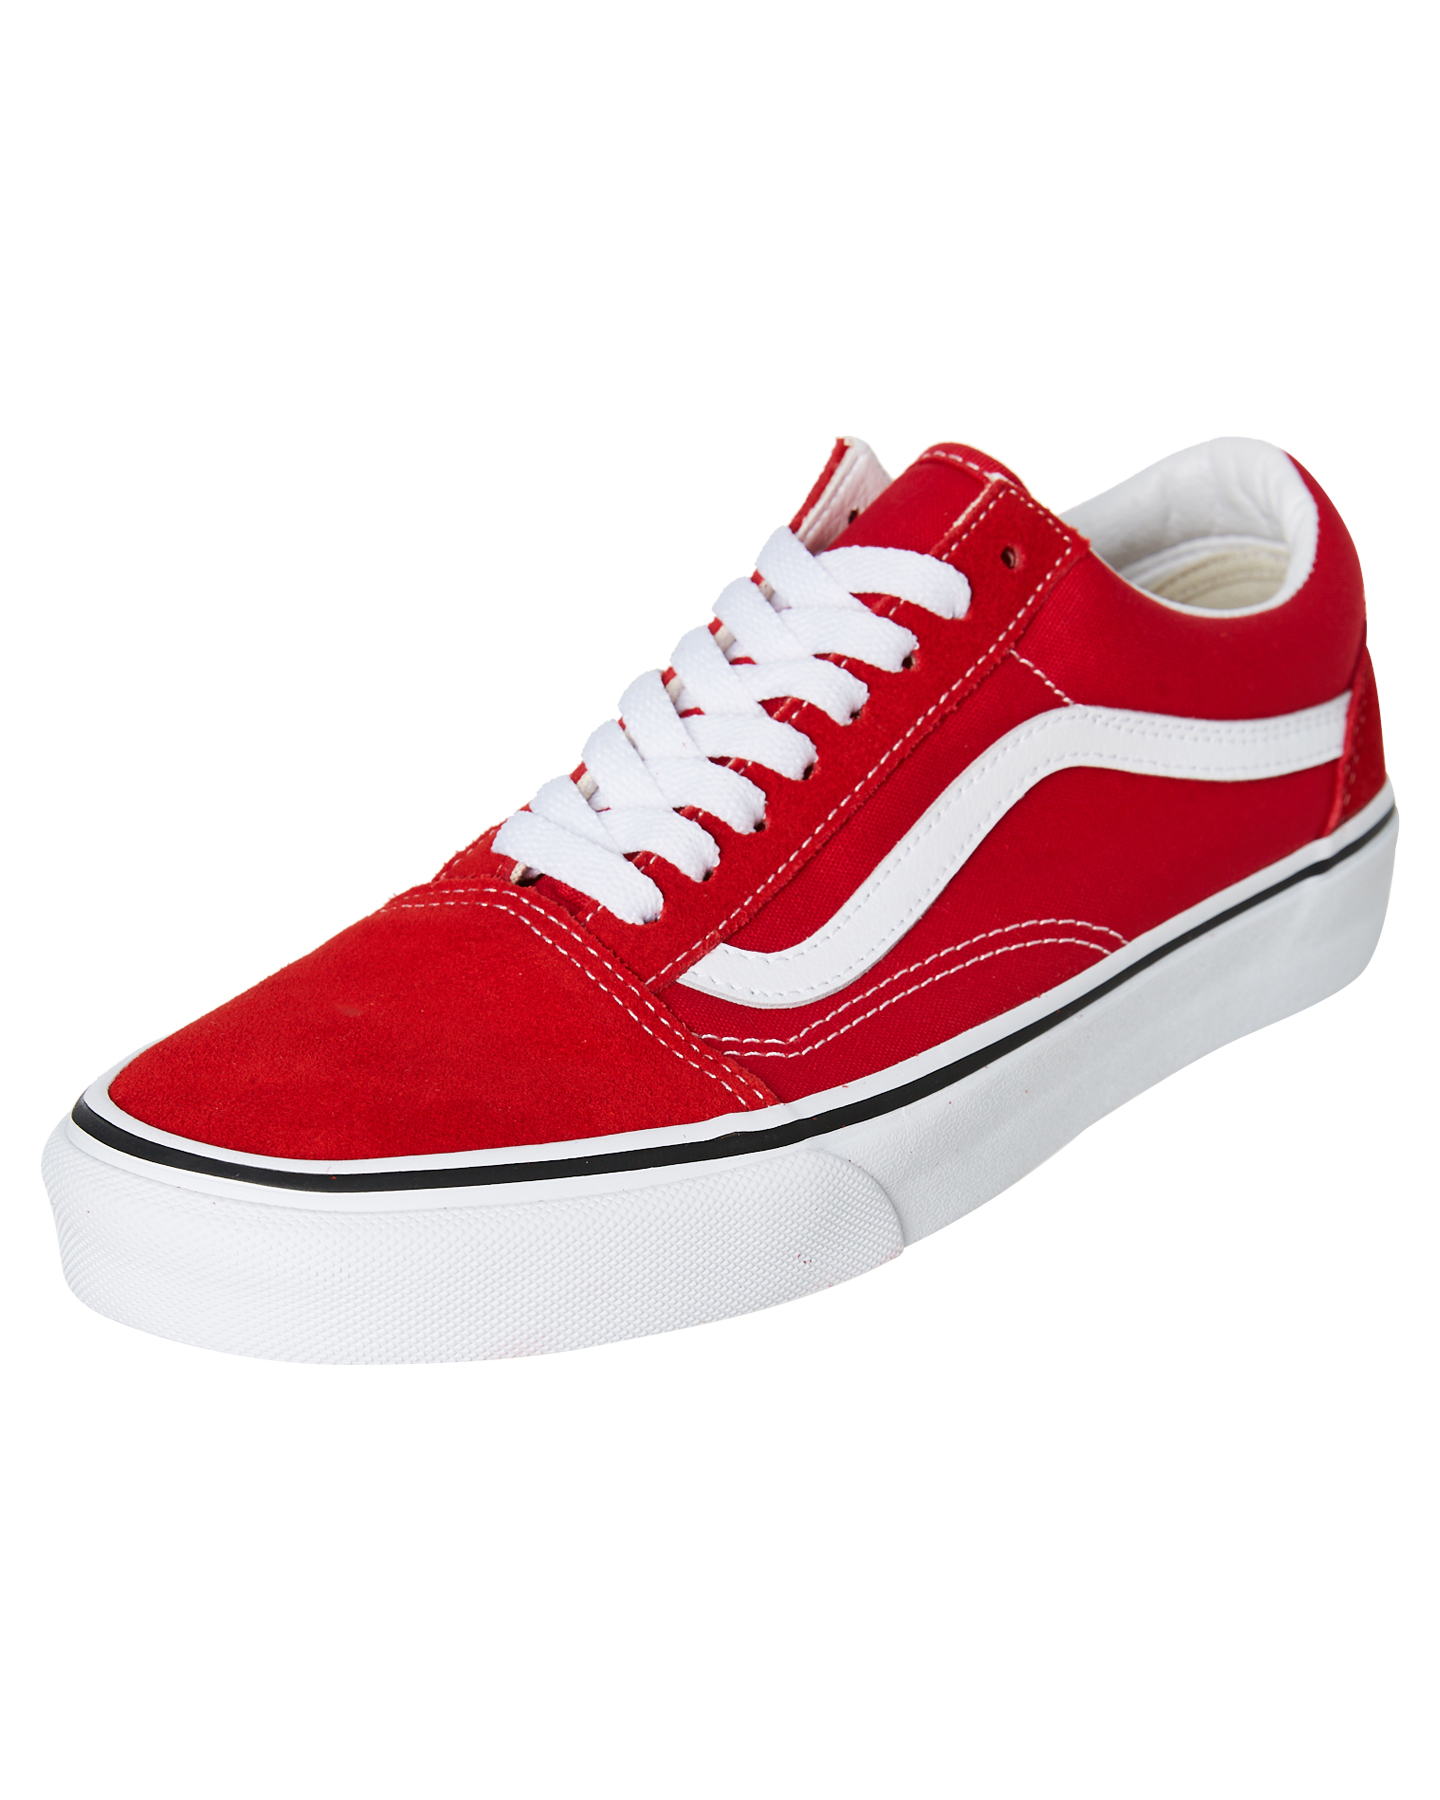 Vans Womens Old Skool Shoe - Racing Red | SurfStitch
 Red Vans Shoes For Girls